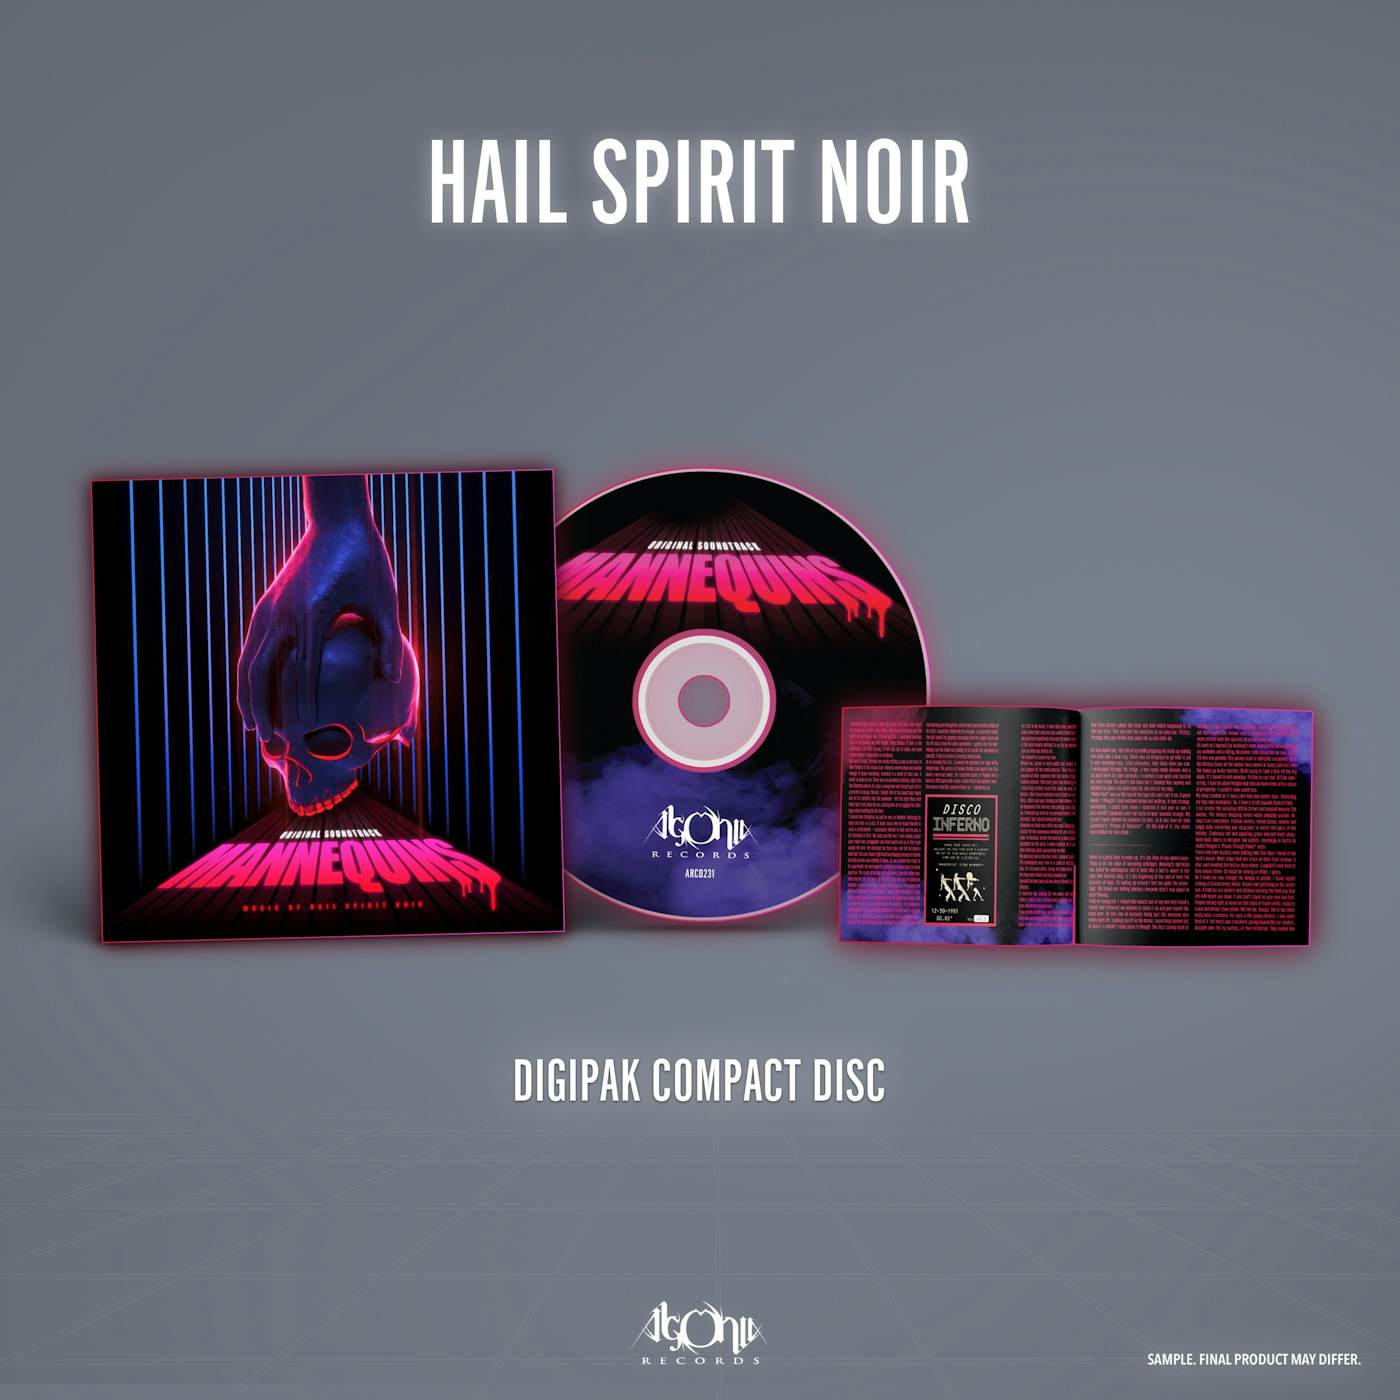 Hail Spirit Noir "Mannequins" Limited Edition CD